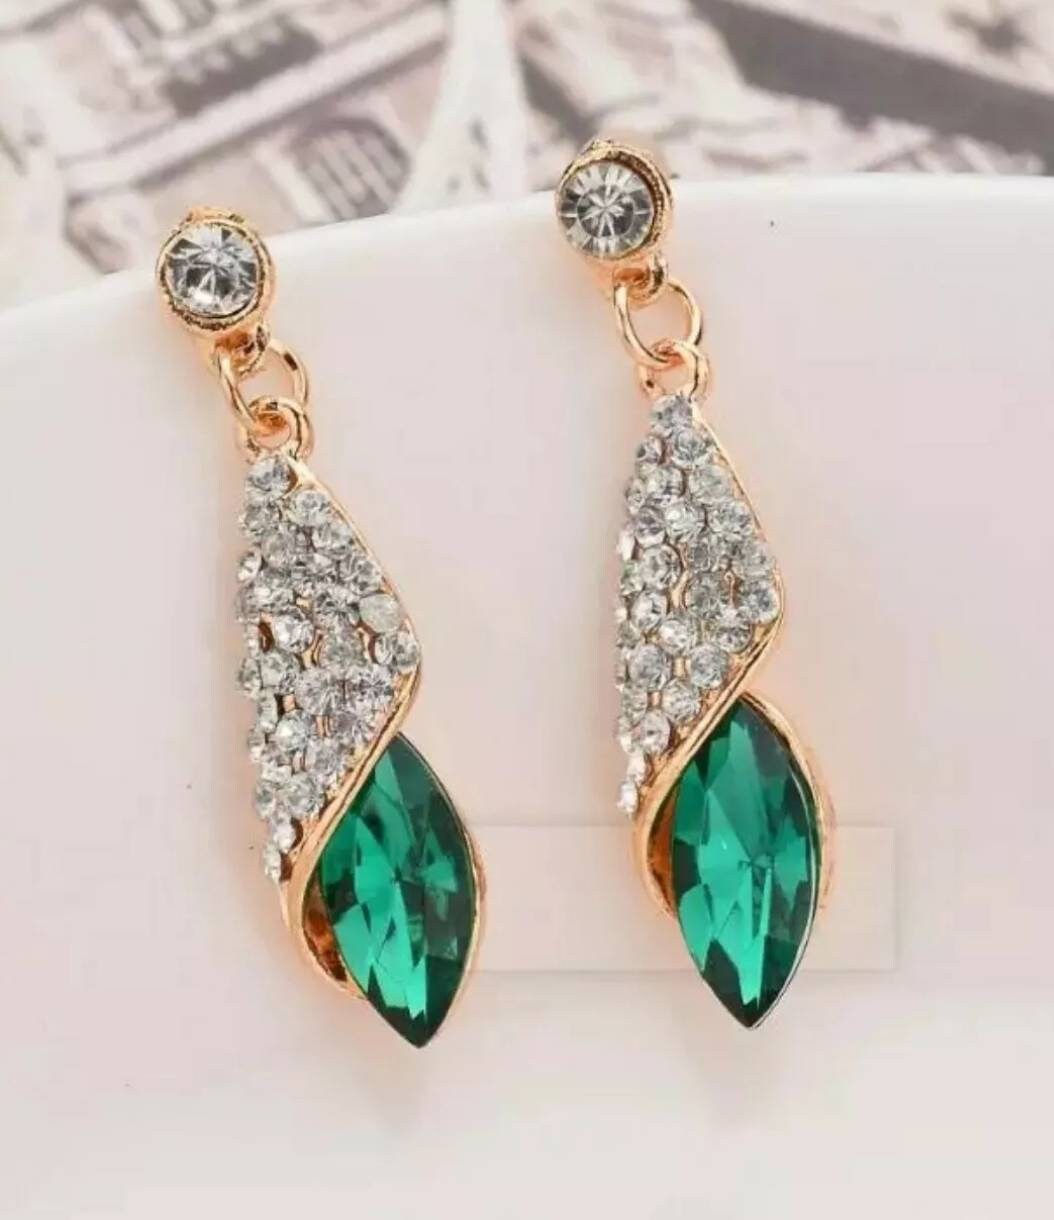 Drop Rhinestone Earrings drills brincos Earrings Jewelry Gift | Etsy